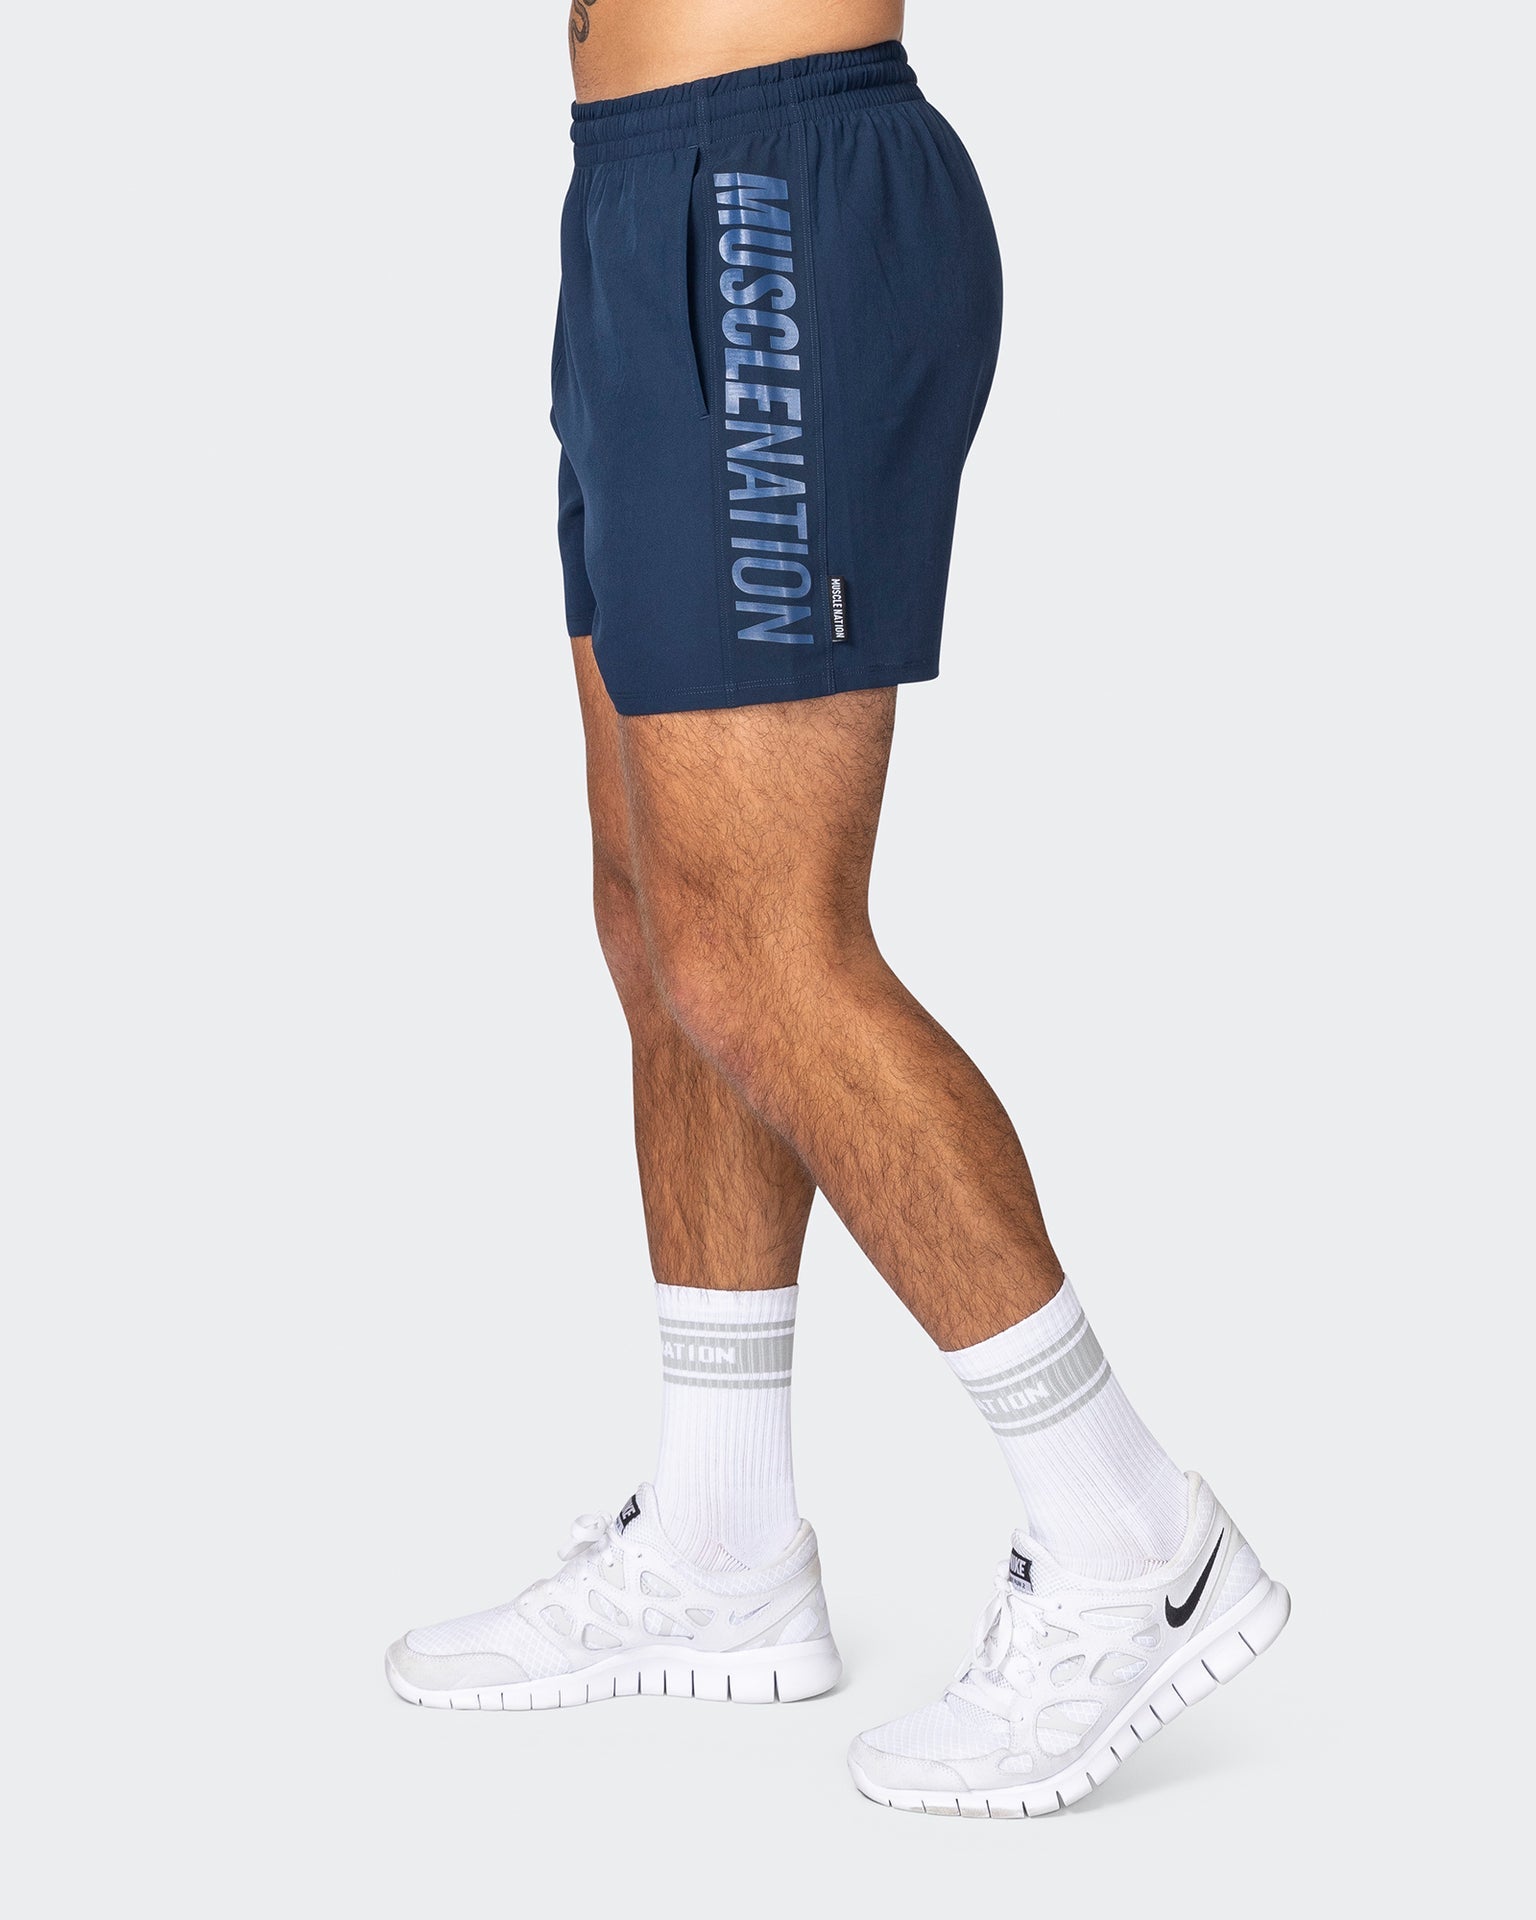 musclenation Gym Shorts Function 4" Shorts - Navy